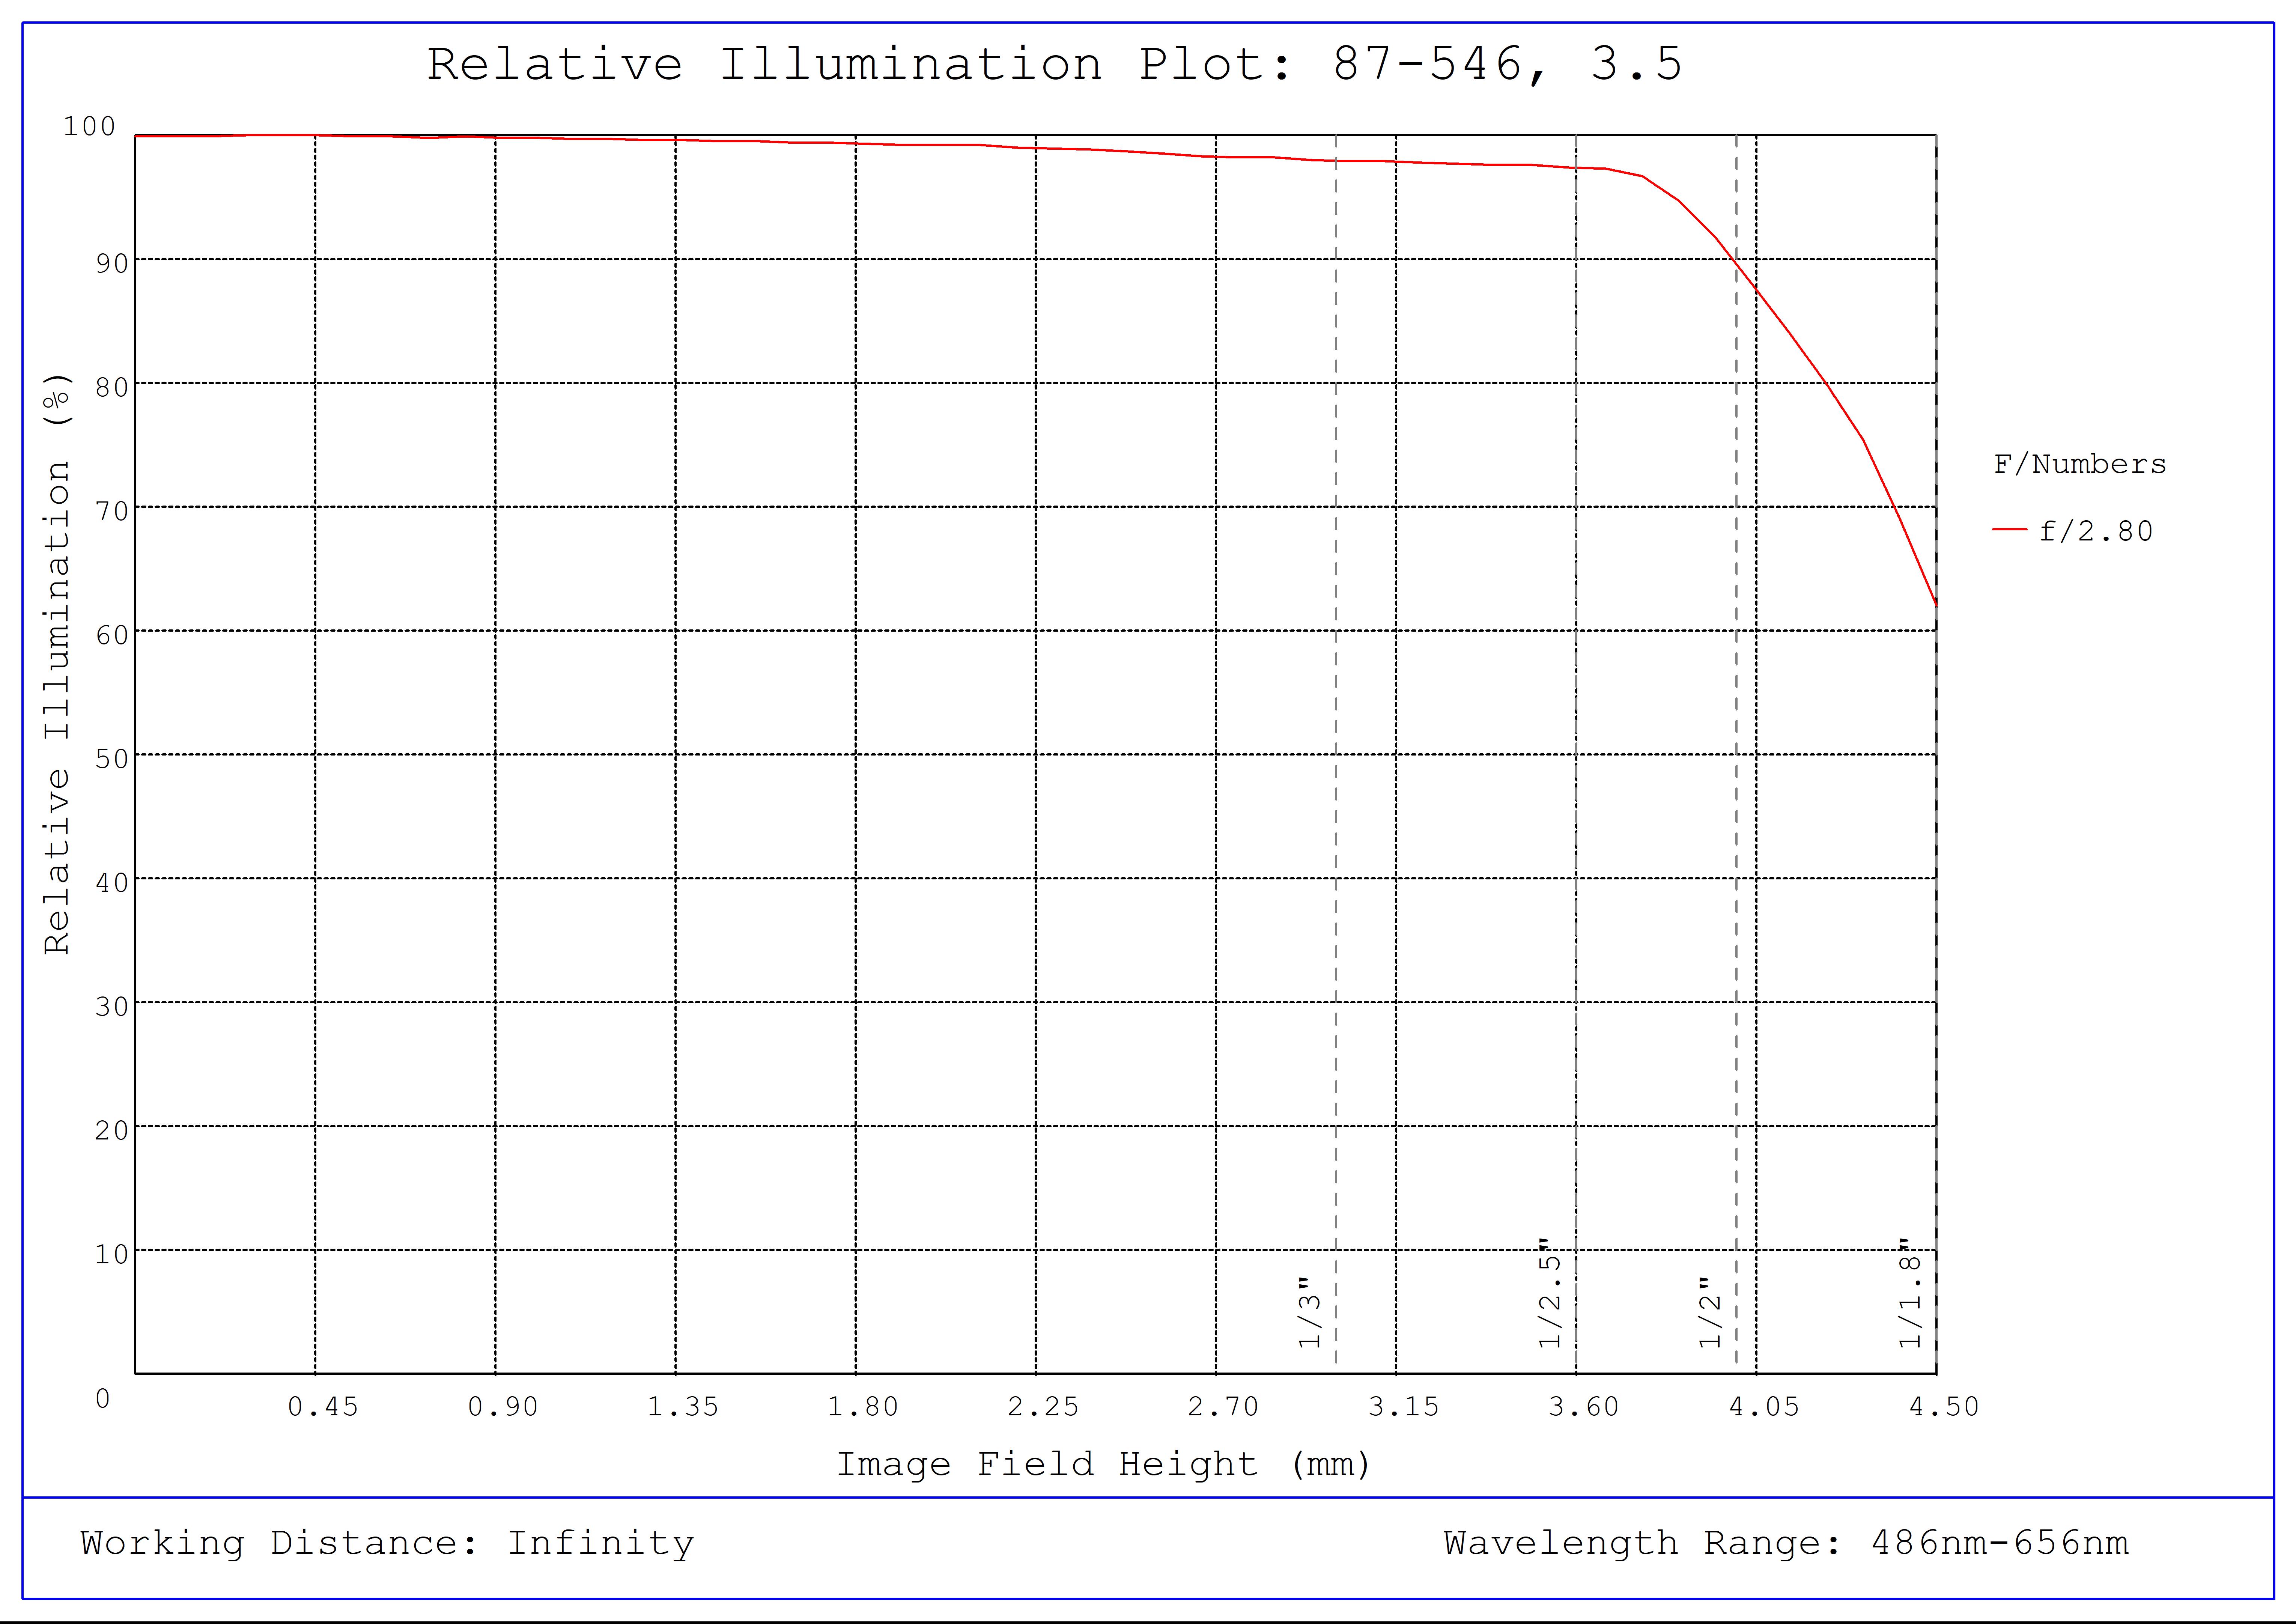 #87-546, 3.5mm, f/2.8 Ci Series Fixed Focal Length Lens, Relative Illumination Plot